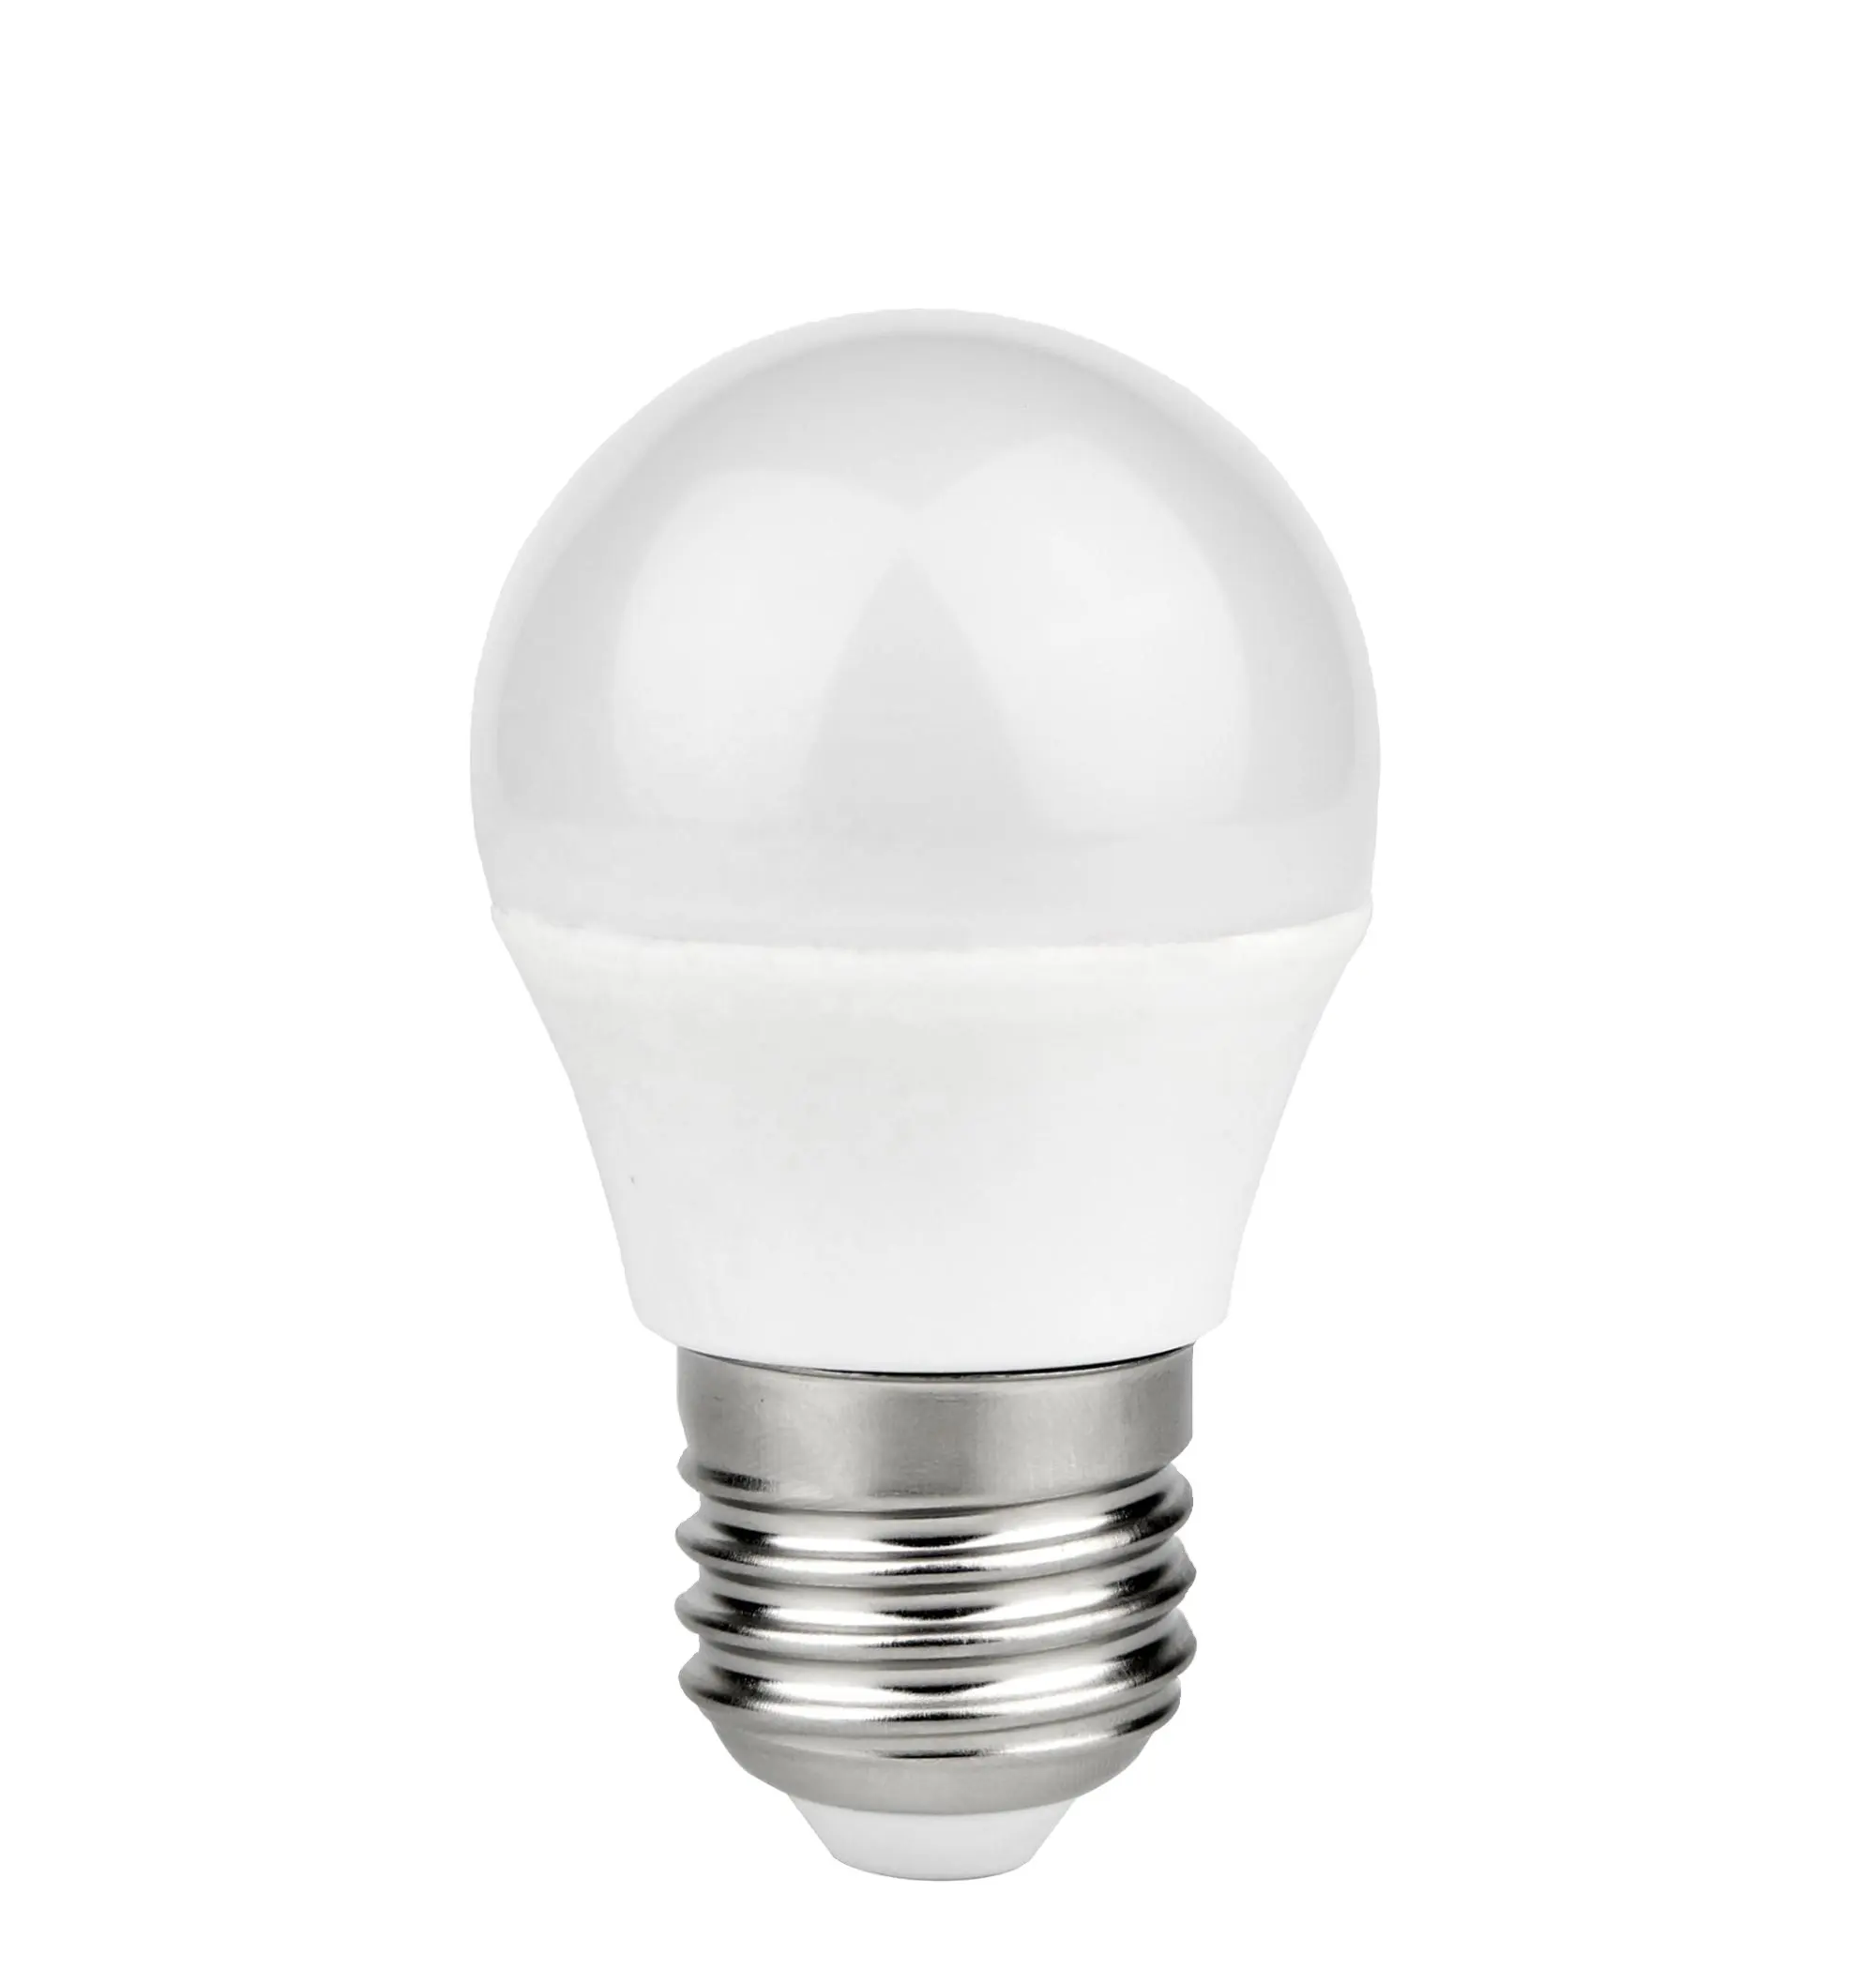 Stepless Dali dimmable led bulb G45 E14/E27 7w 630LM Globe lights lamparas manufacture energy saving